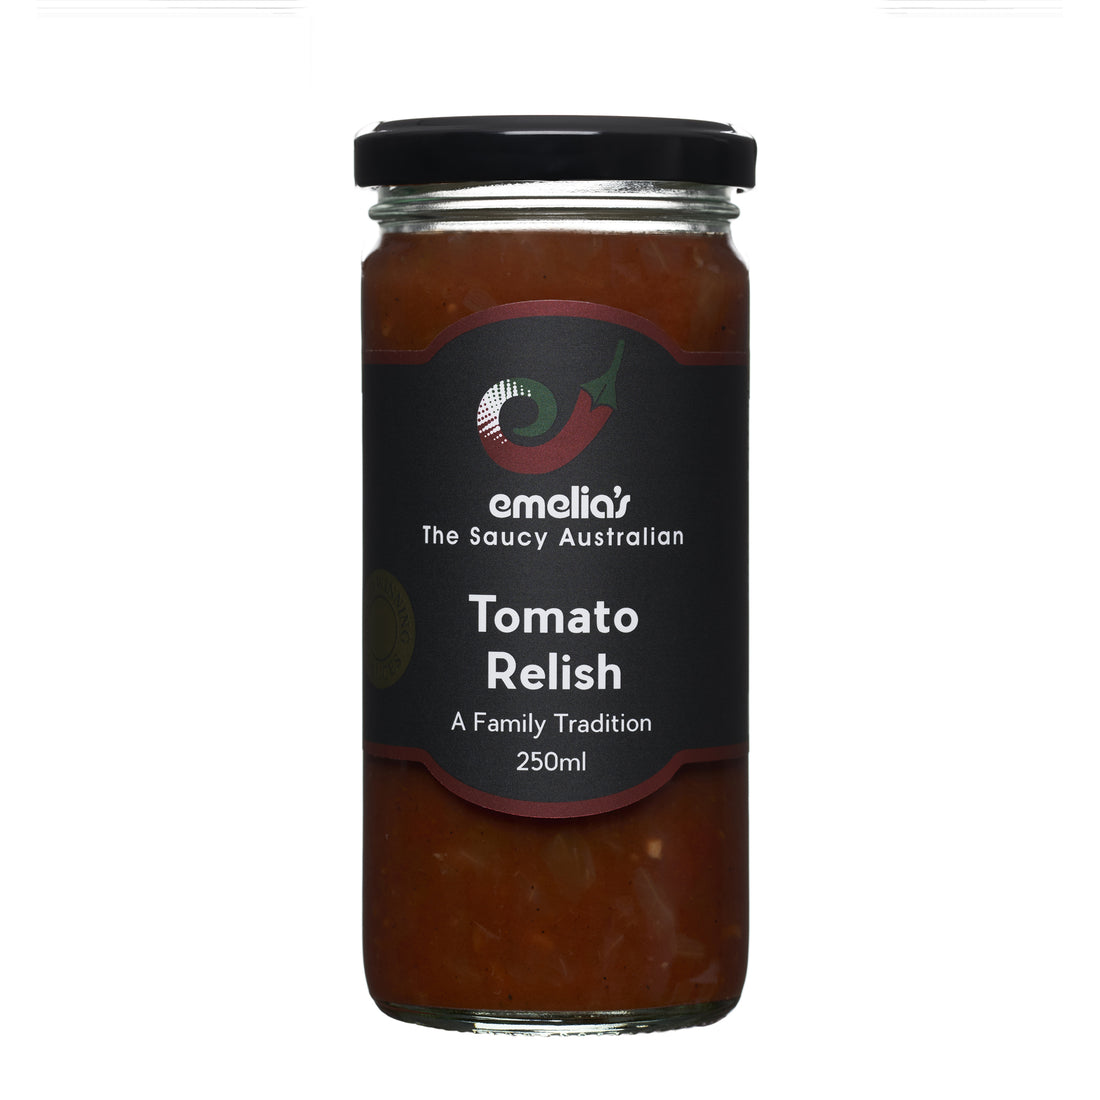 Tomato relish